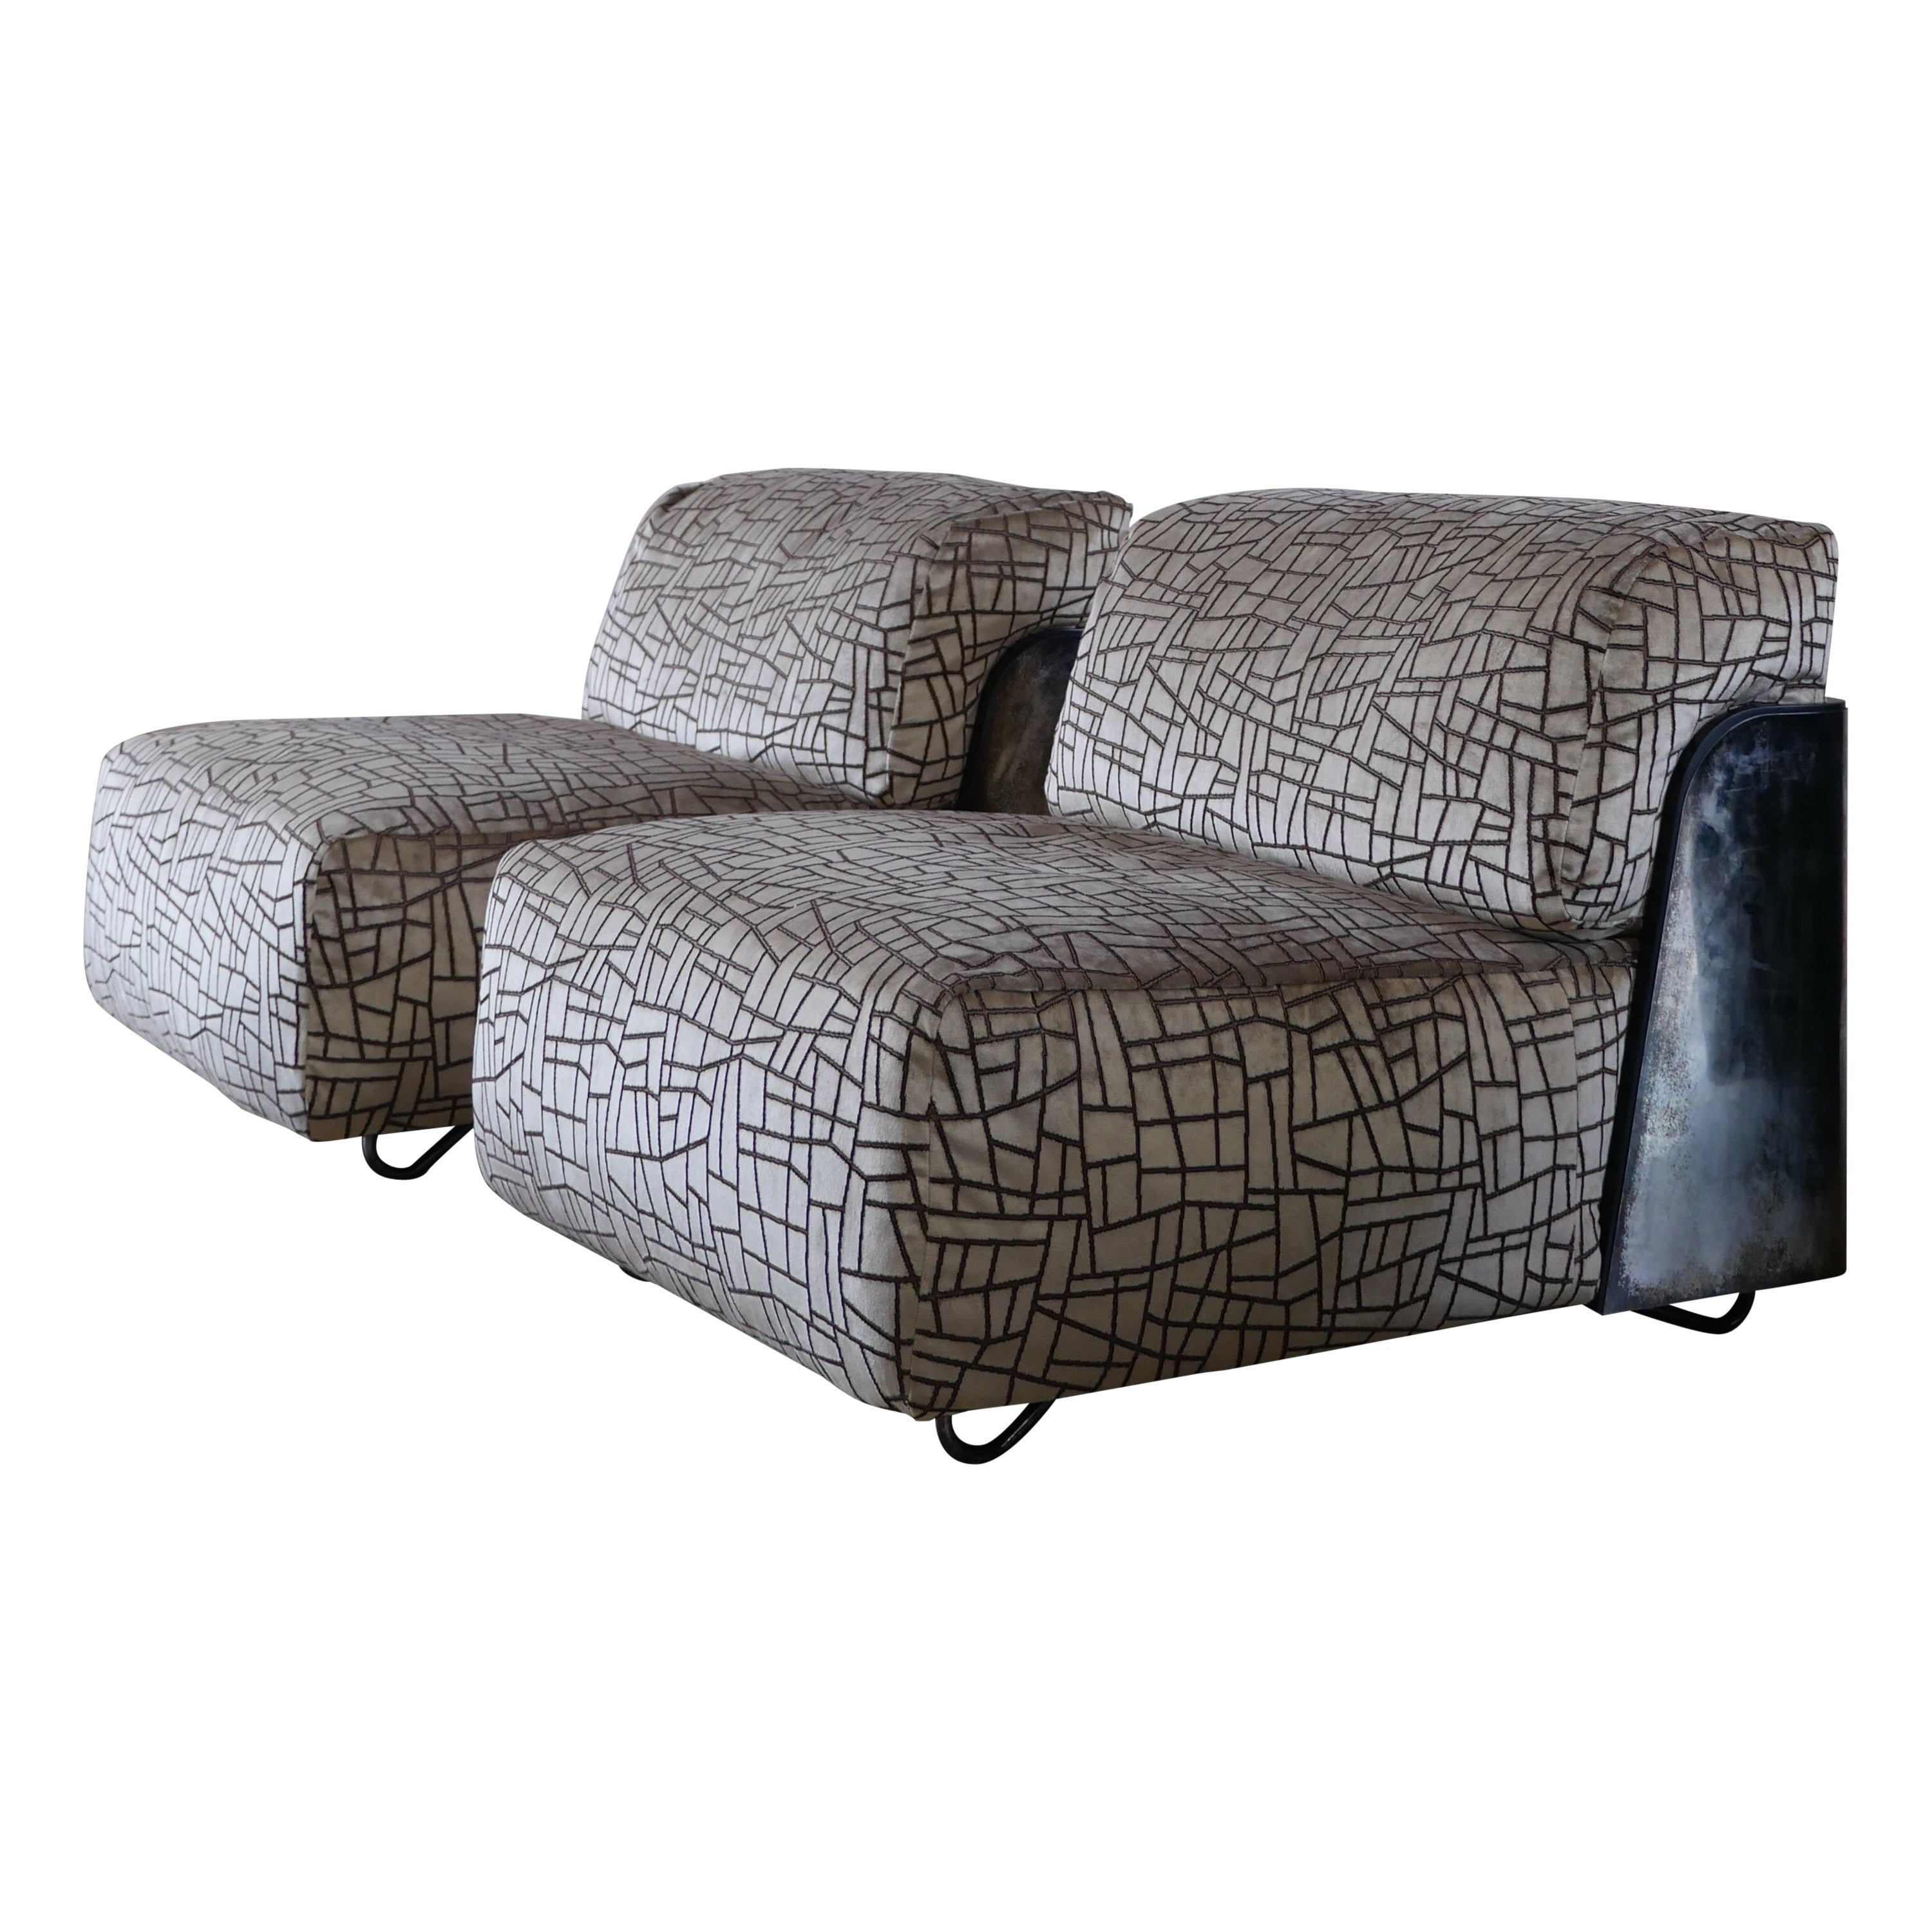 Modern Saint-Germain Lounge Chair by Italian Designer Gio Pagani - Set of 2